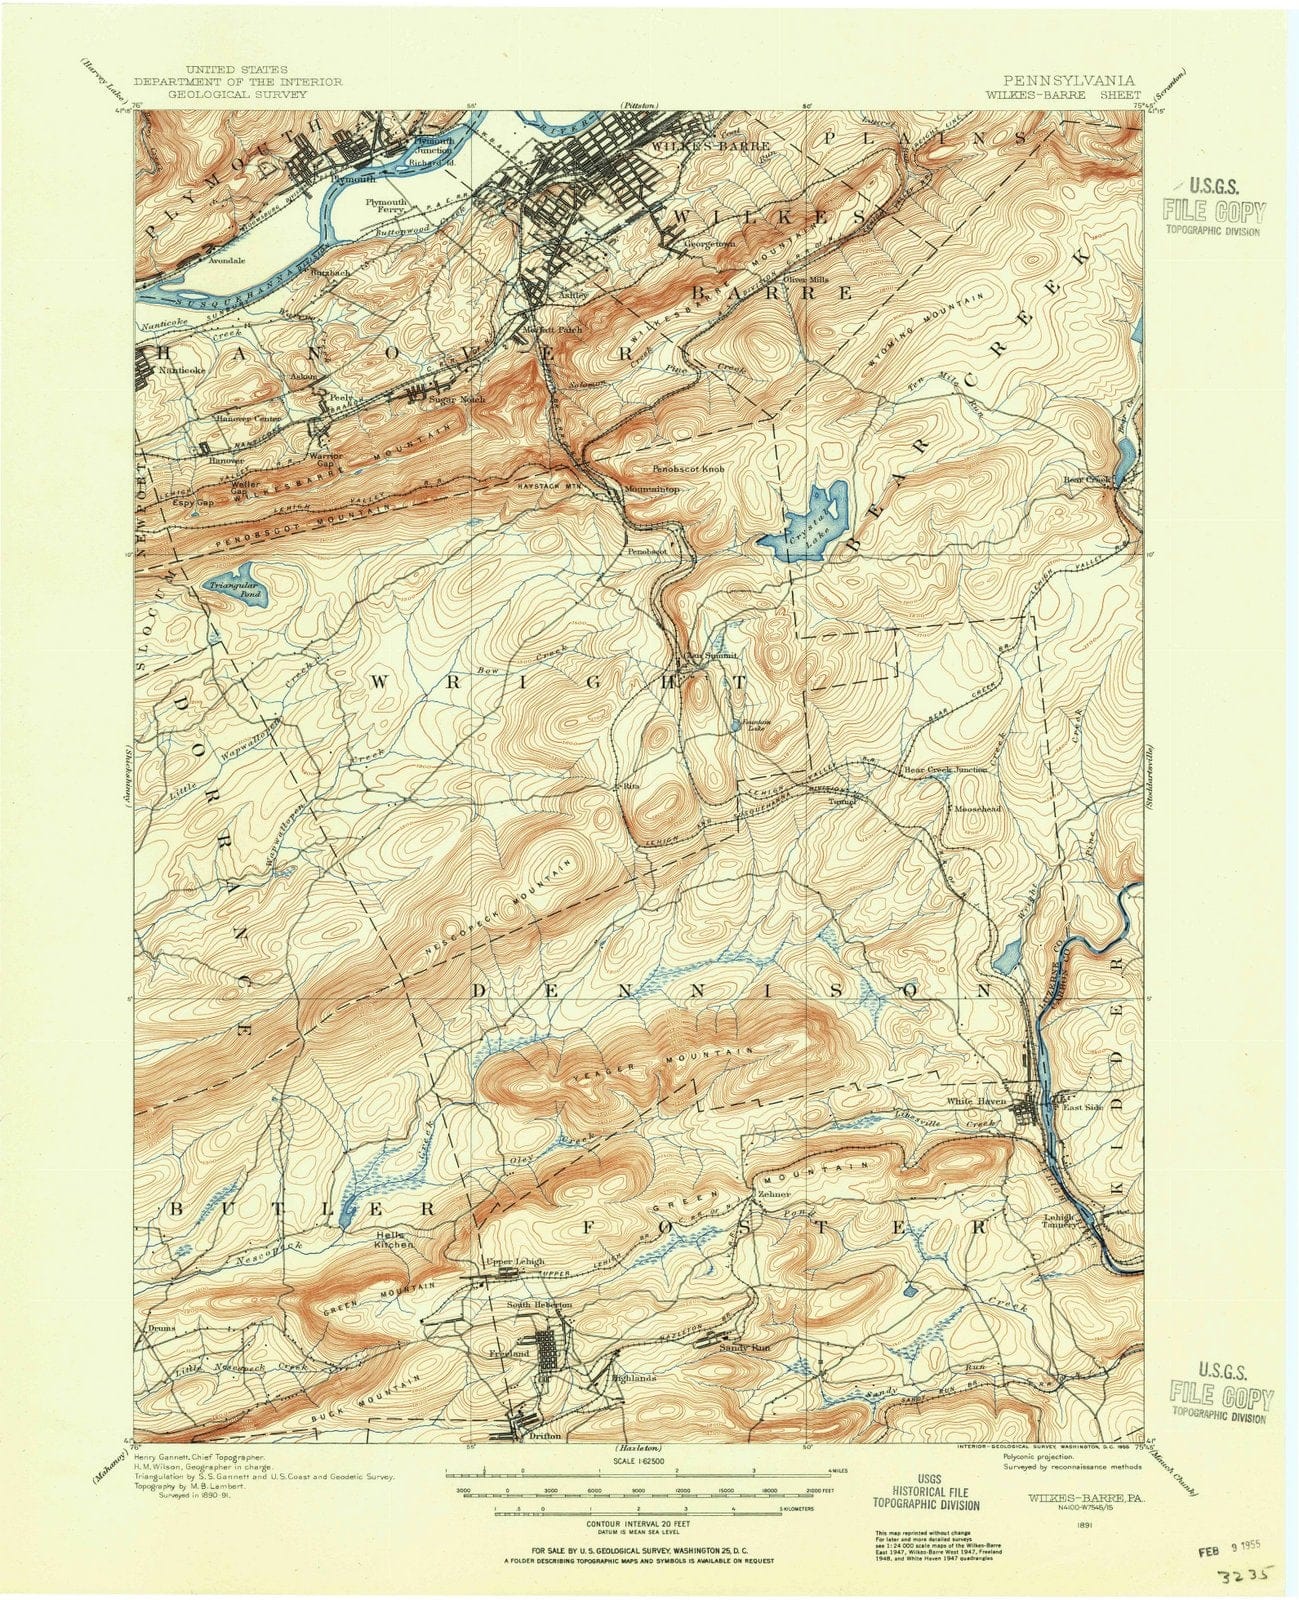 1891 Wilkes, PA - Pennsylvania - USGS Topographic Map